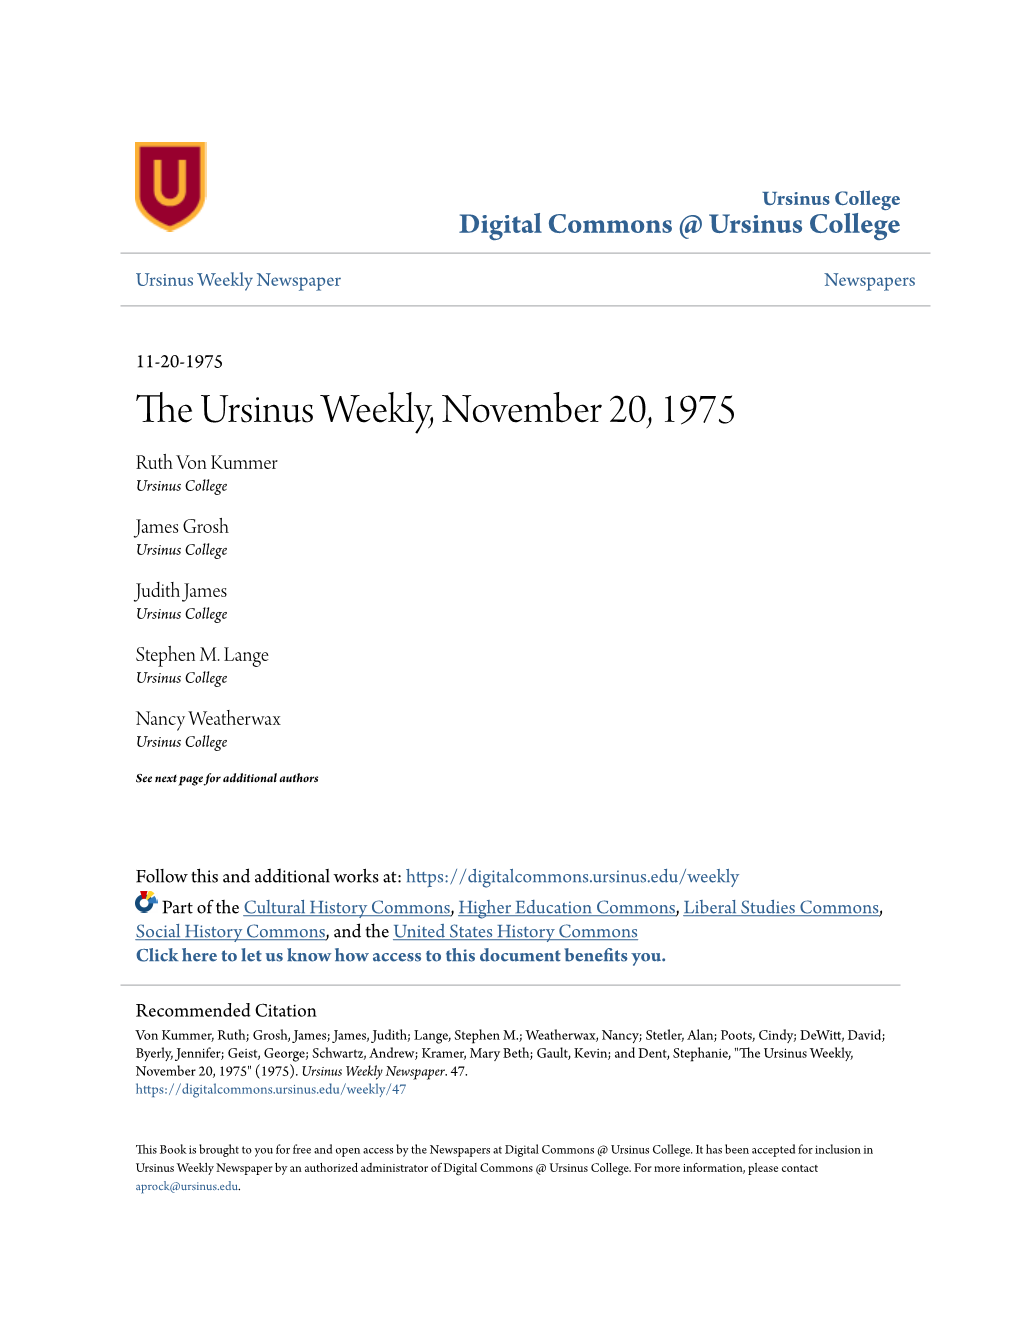 The Ursinus Weekly, November 20, 1975